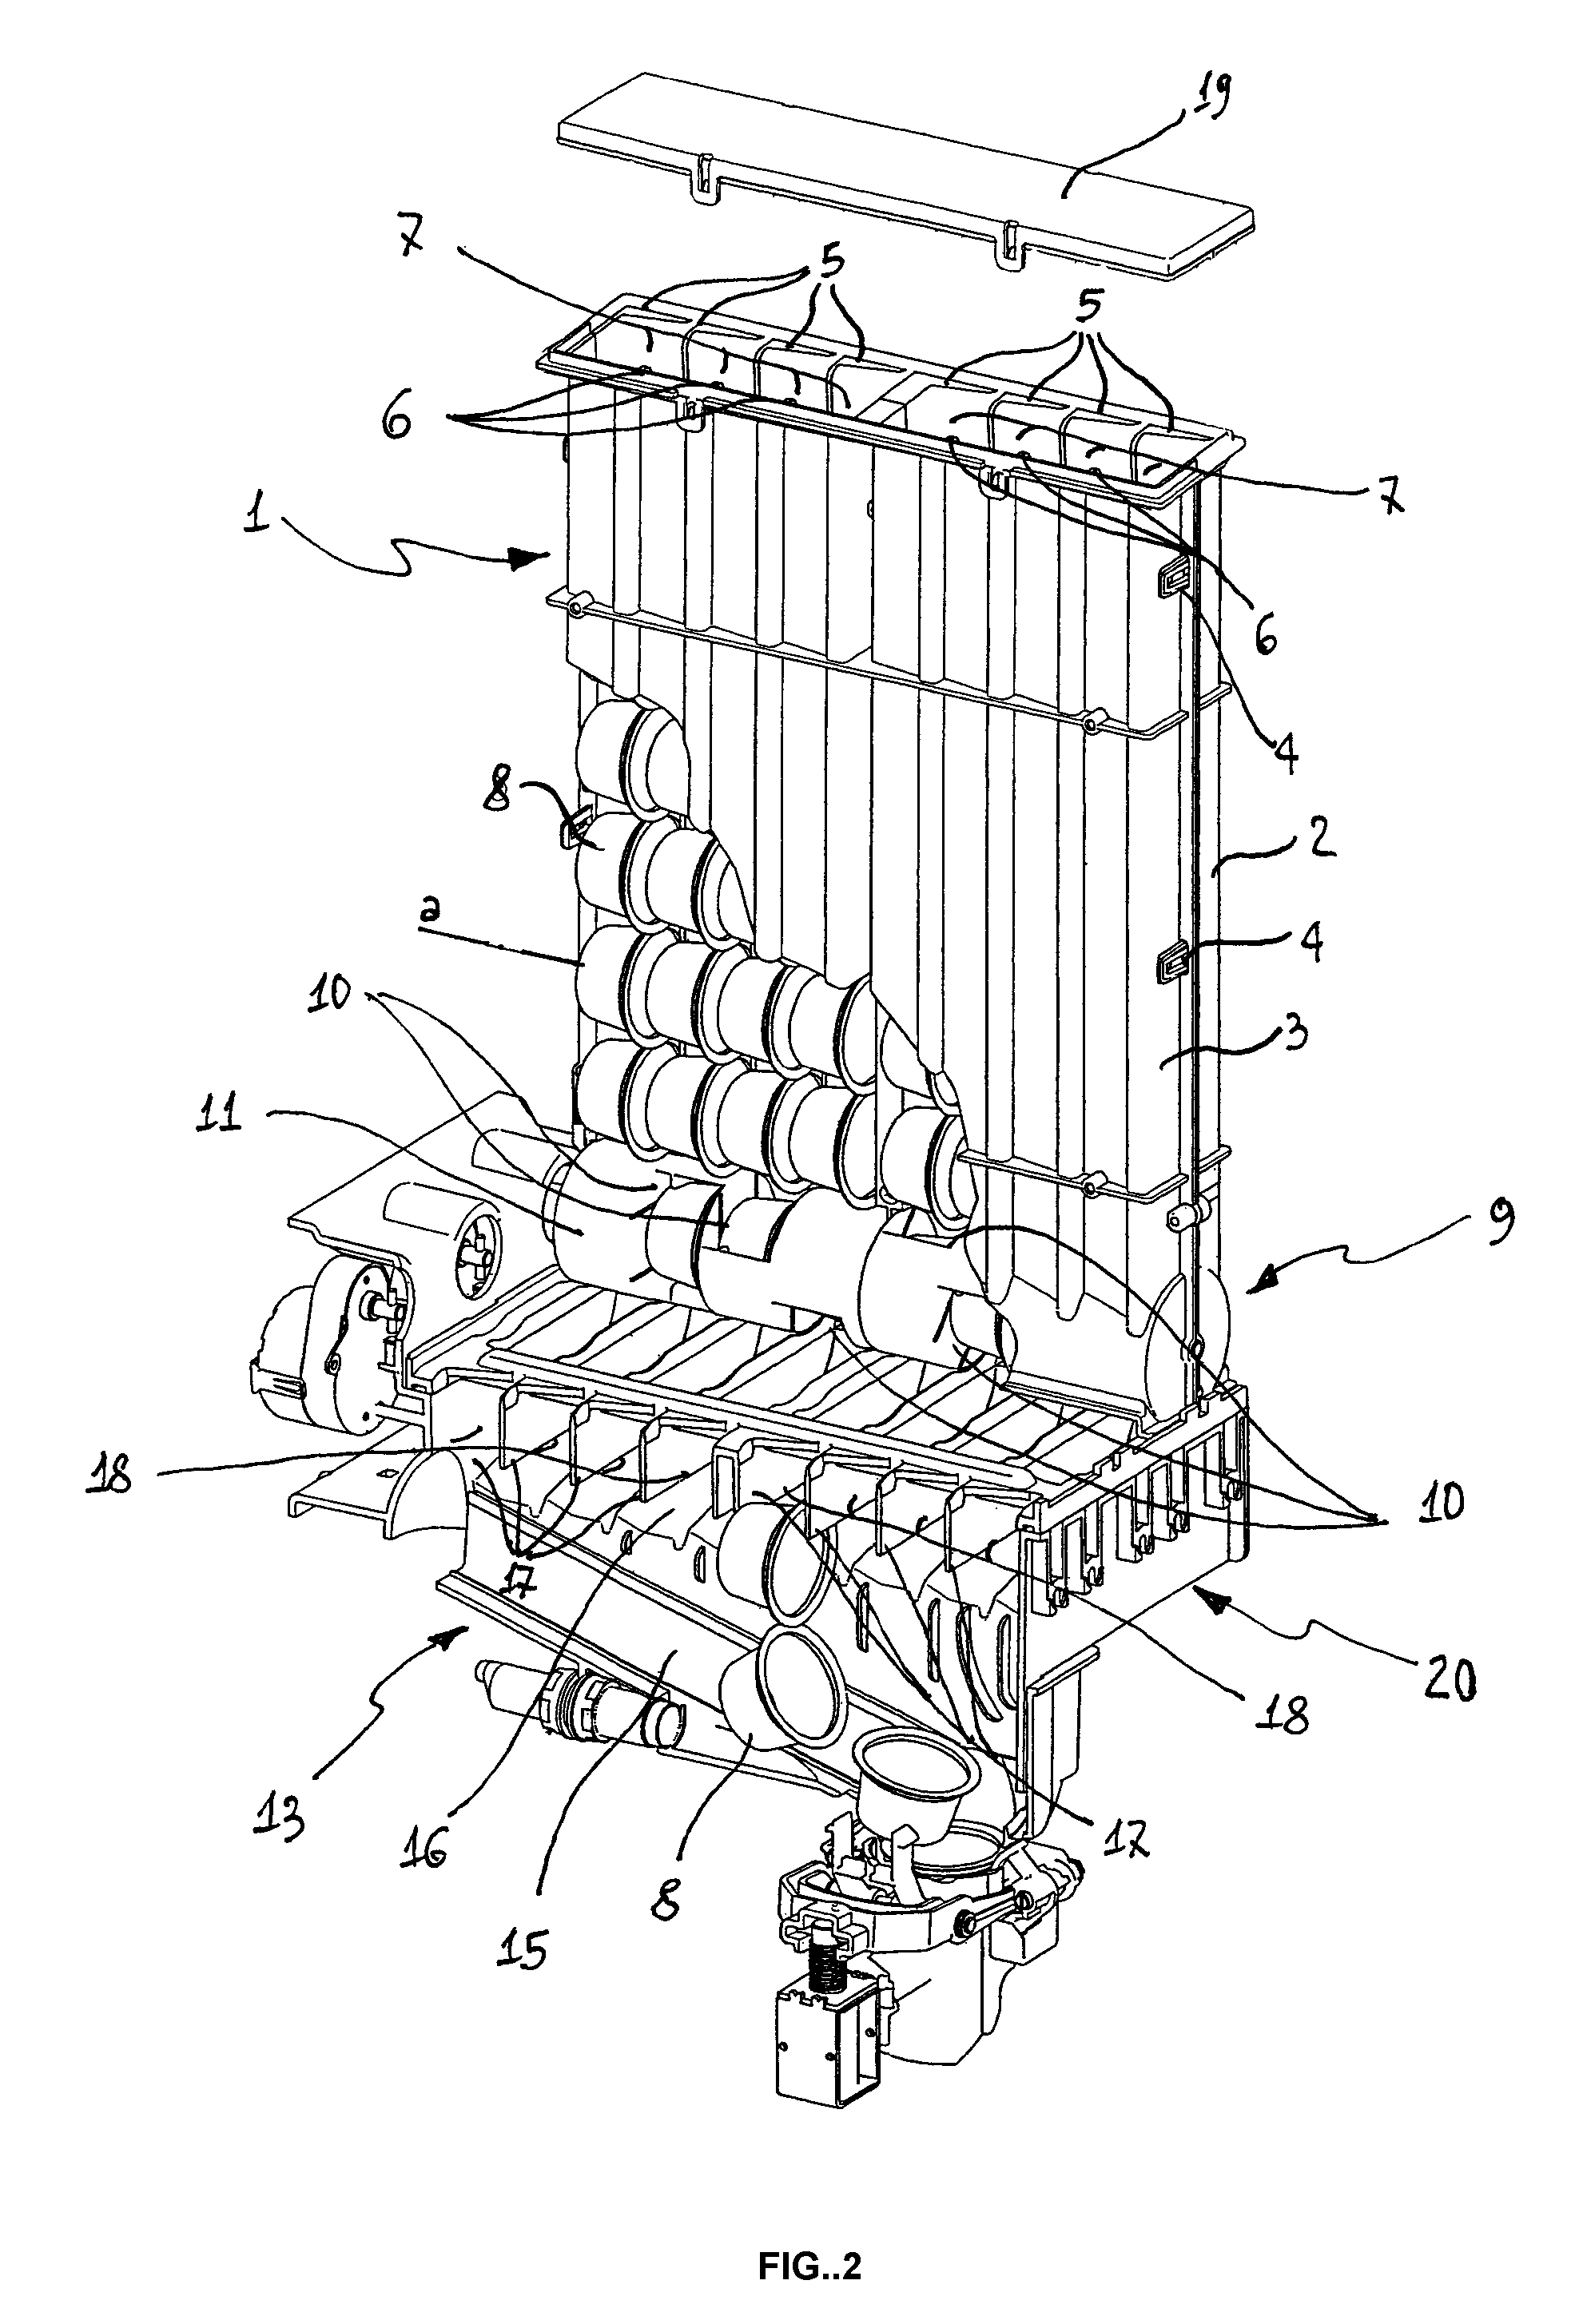 Capsule dispensing apparatus